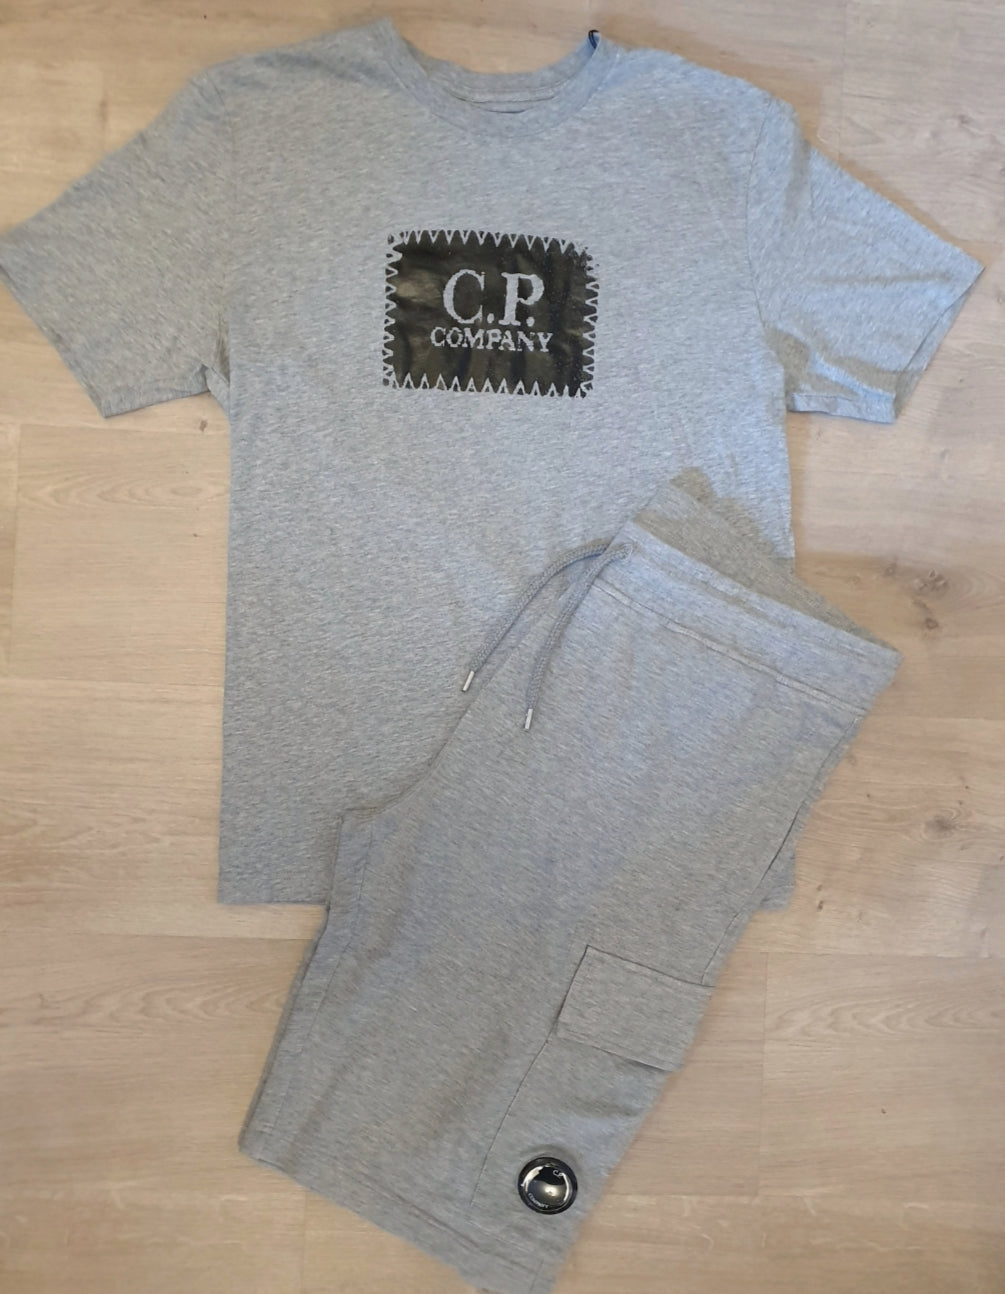 CP Company Shorts Set Grey